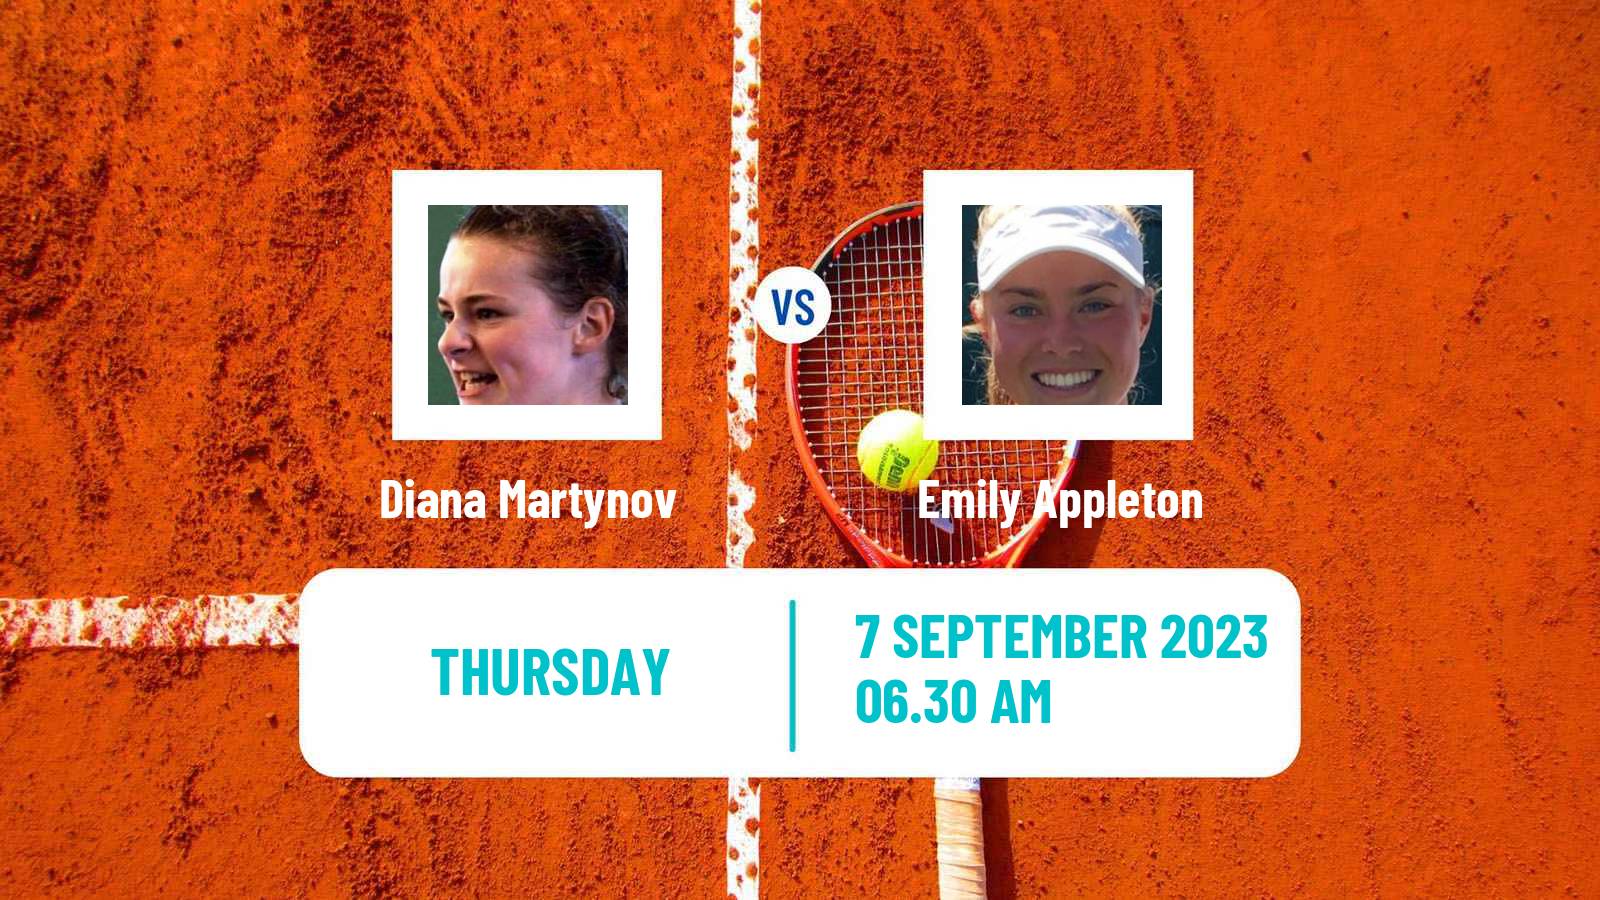 Tennis ITF W40 Saint Palais Sur Mer Women Diana Martynov - Emily Appleton